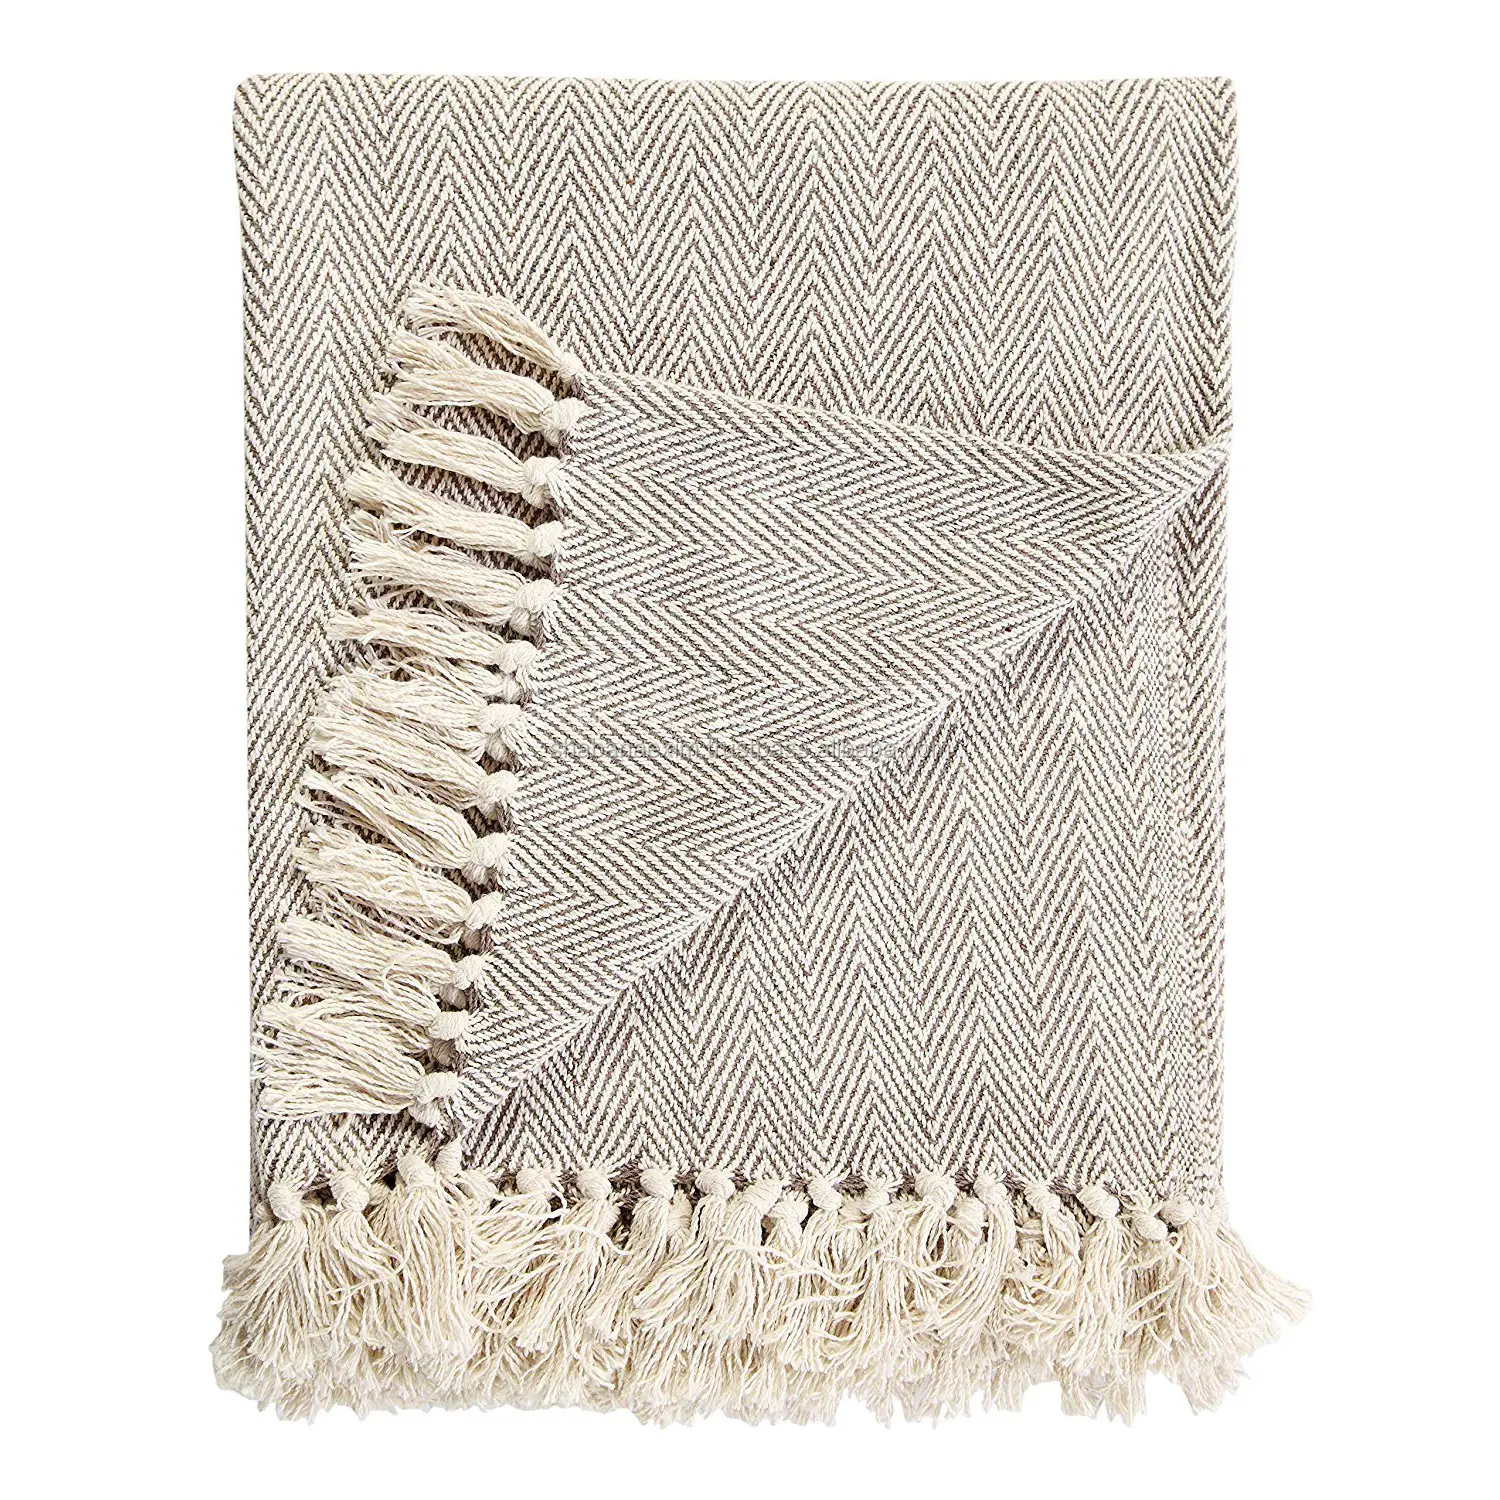 Cotton Throws Blankets Indian Decorative Grey Handmade Woven Throw Sofa Blanket